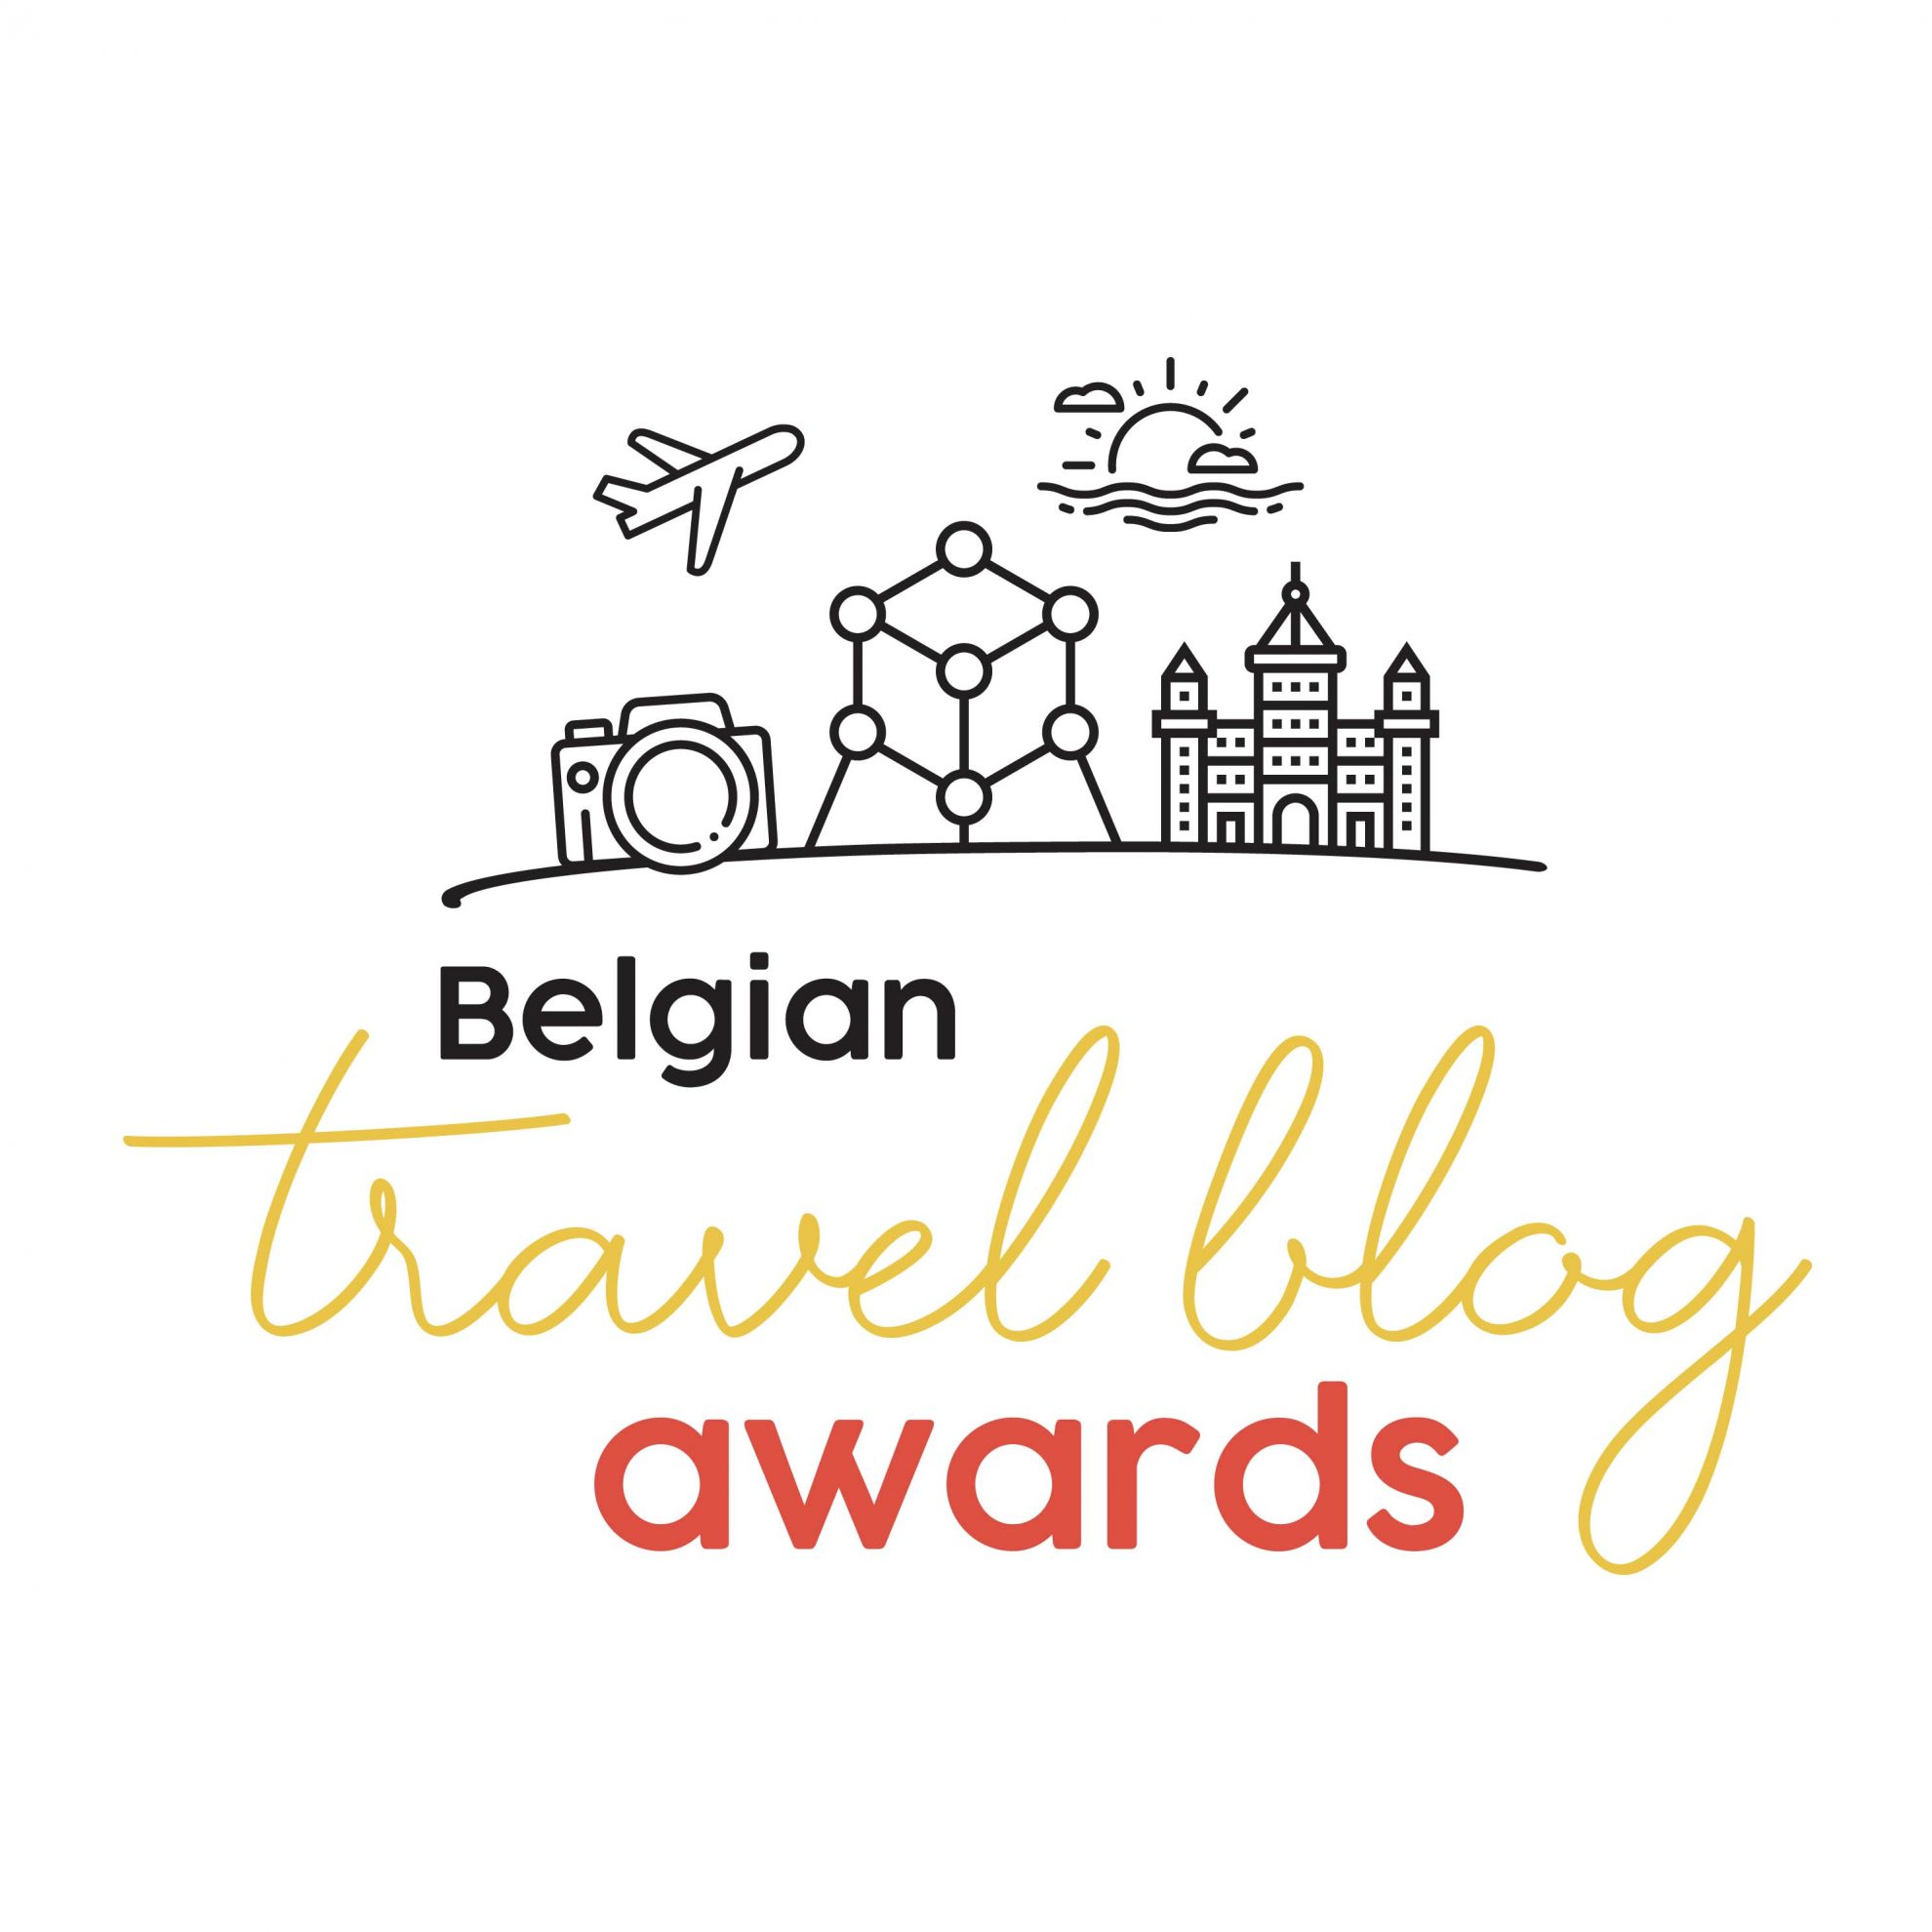 belgian travel blog awards